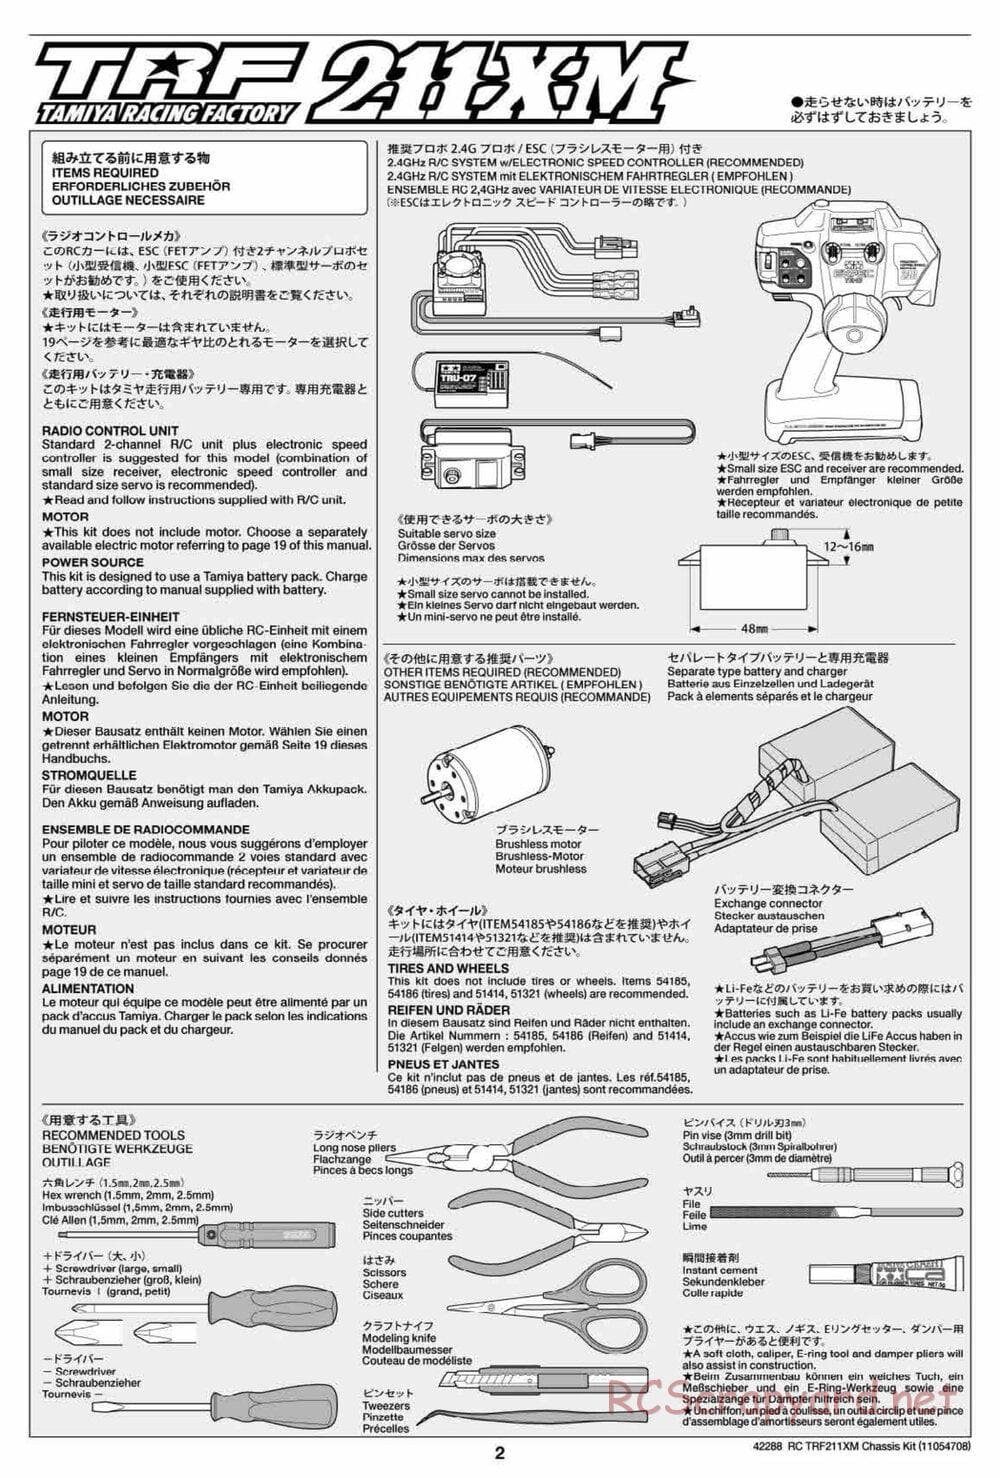 Tamiya - TRF211XM Chassis - Manual - Page 2